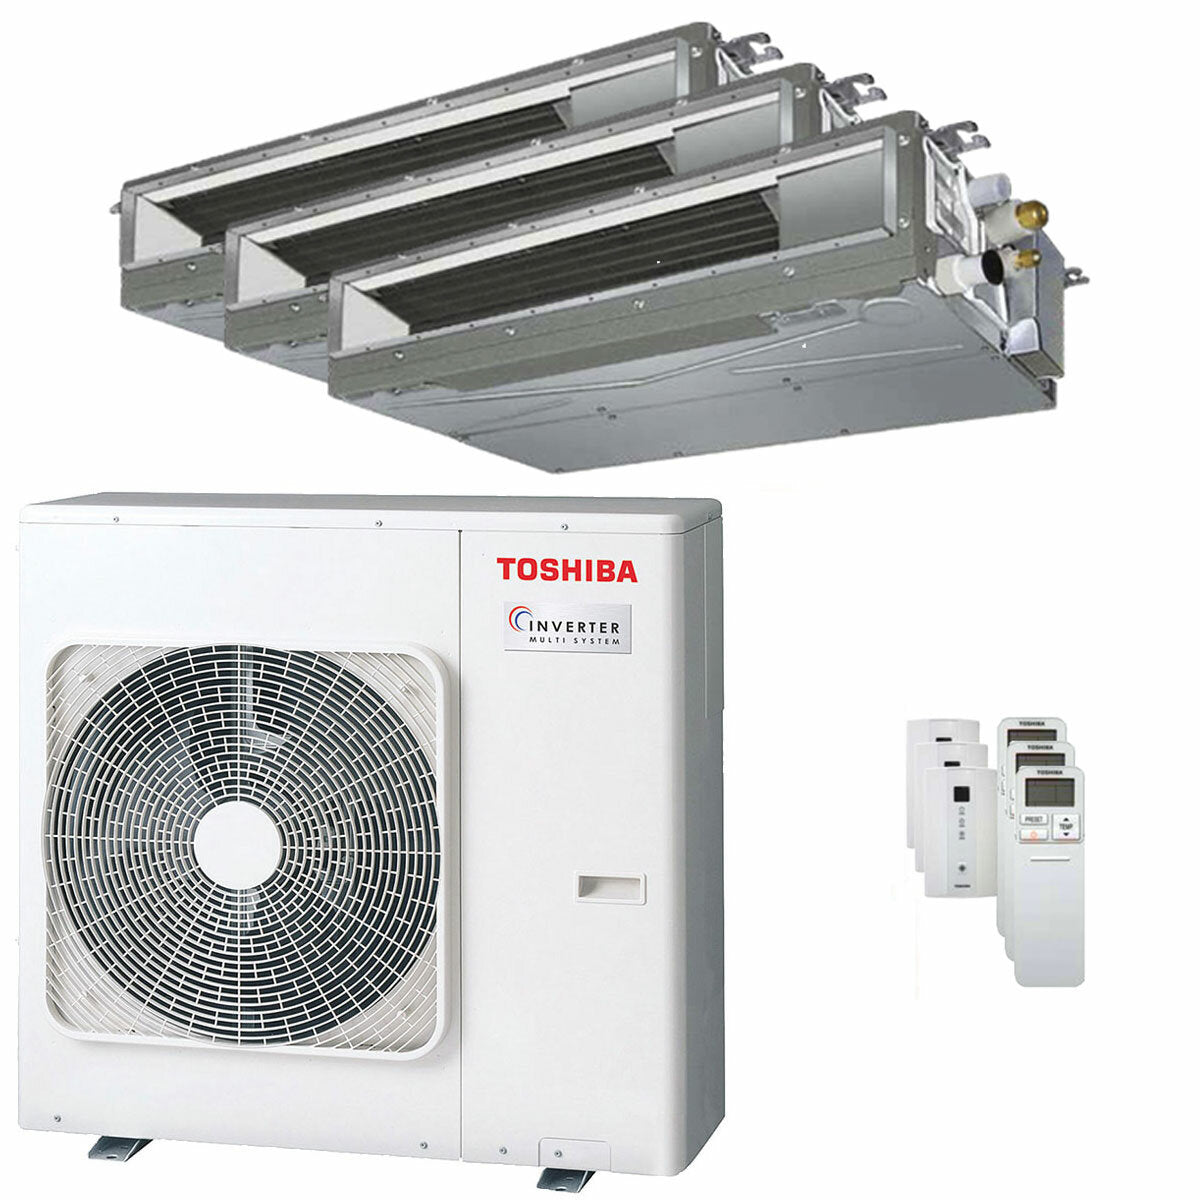 Toshiba ducted air conditioner U2 trial split 9000+12000+16000 BTU inverter A+++ external unit 7 kW